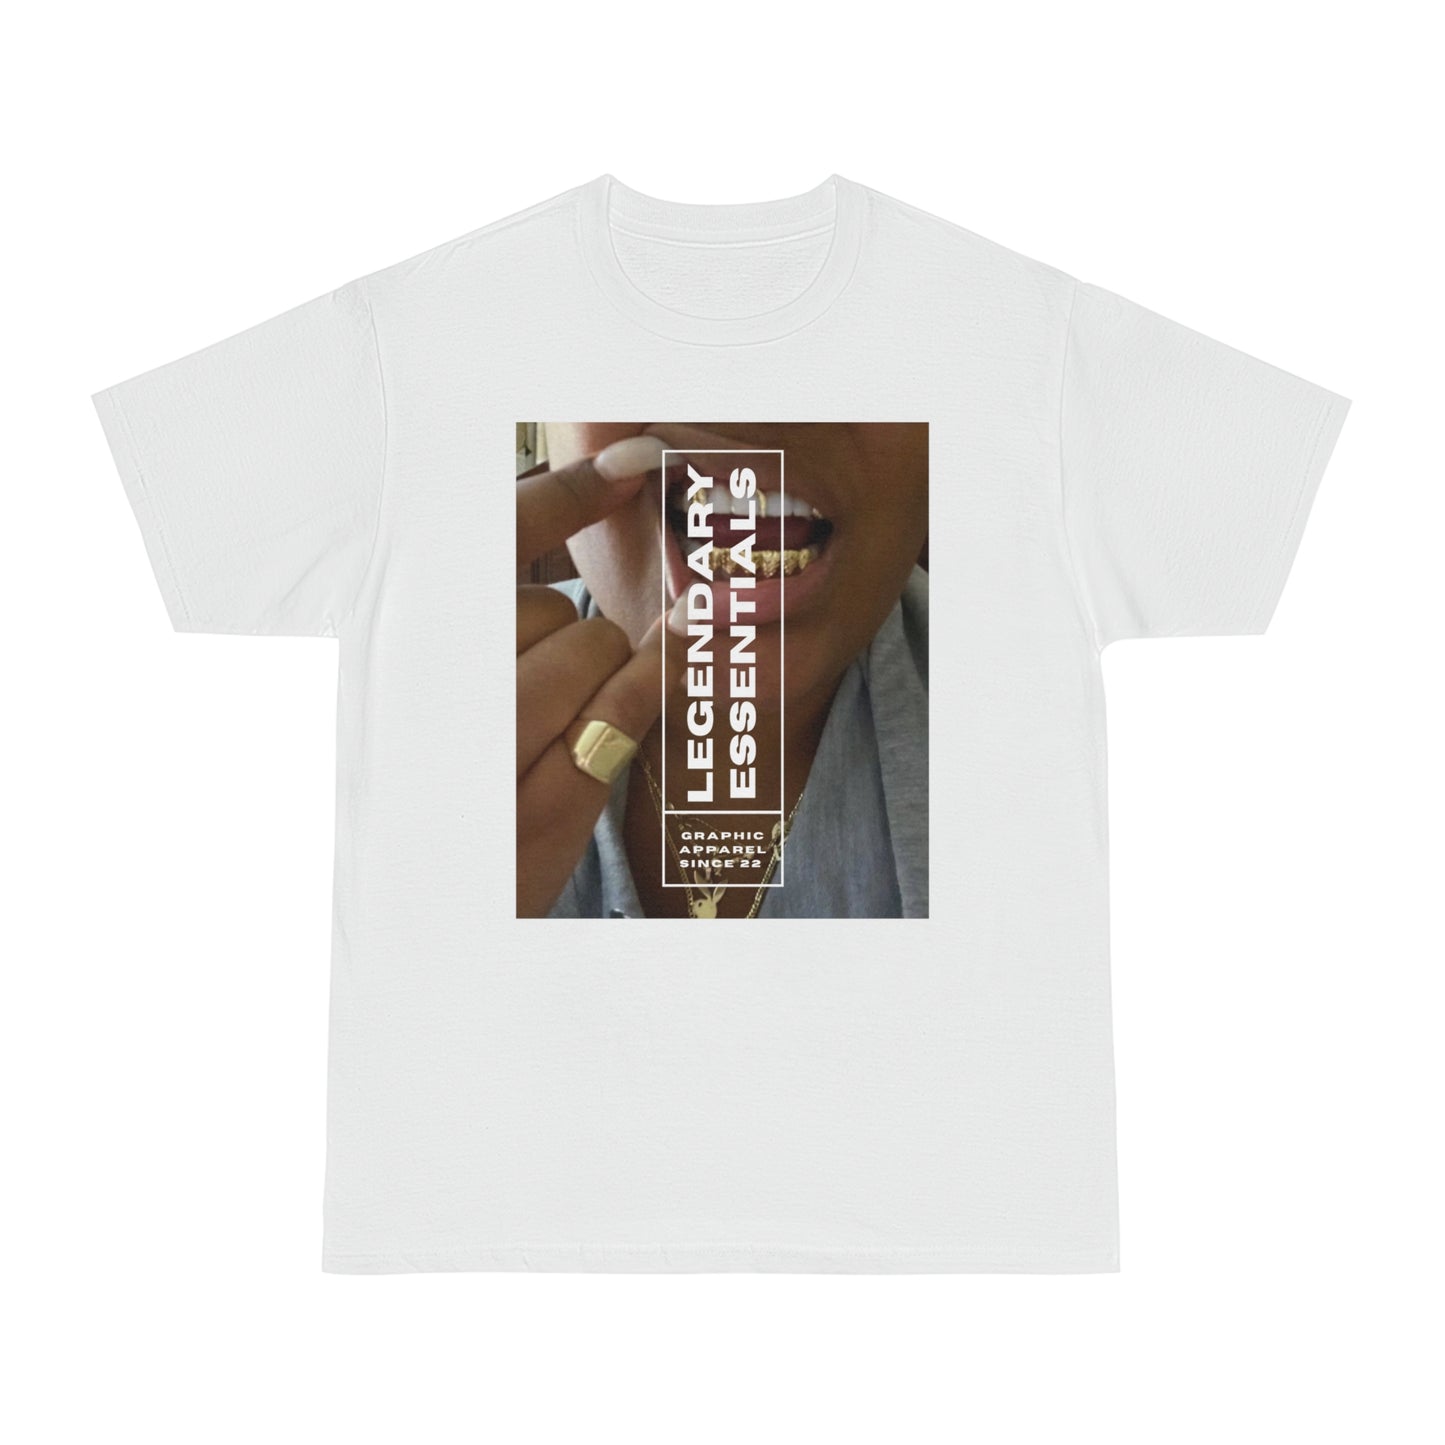 Grill 'Em T-shirt